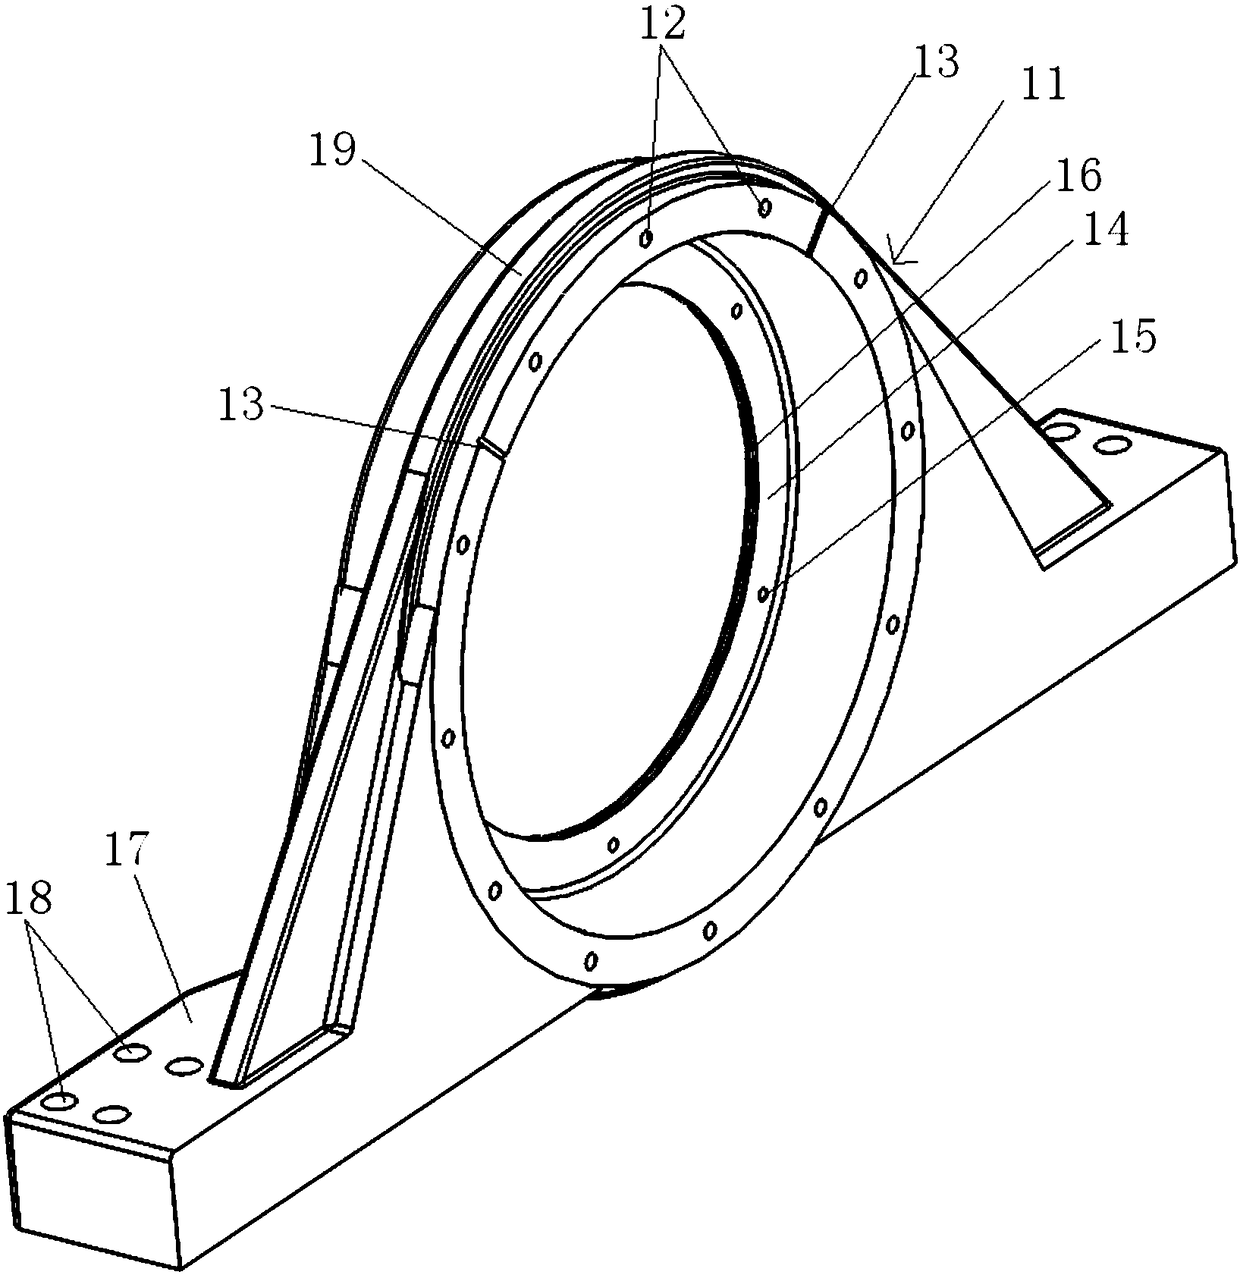 Modular centering bearing device